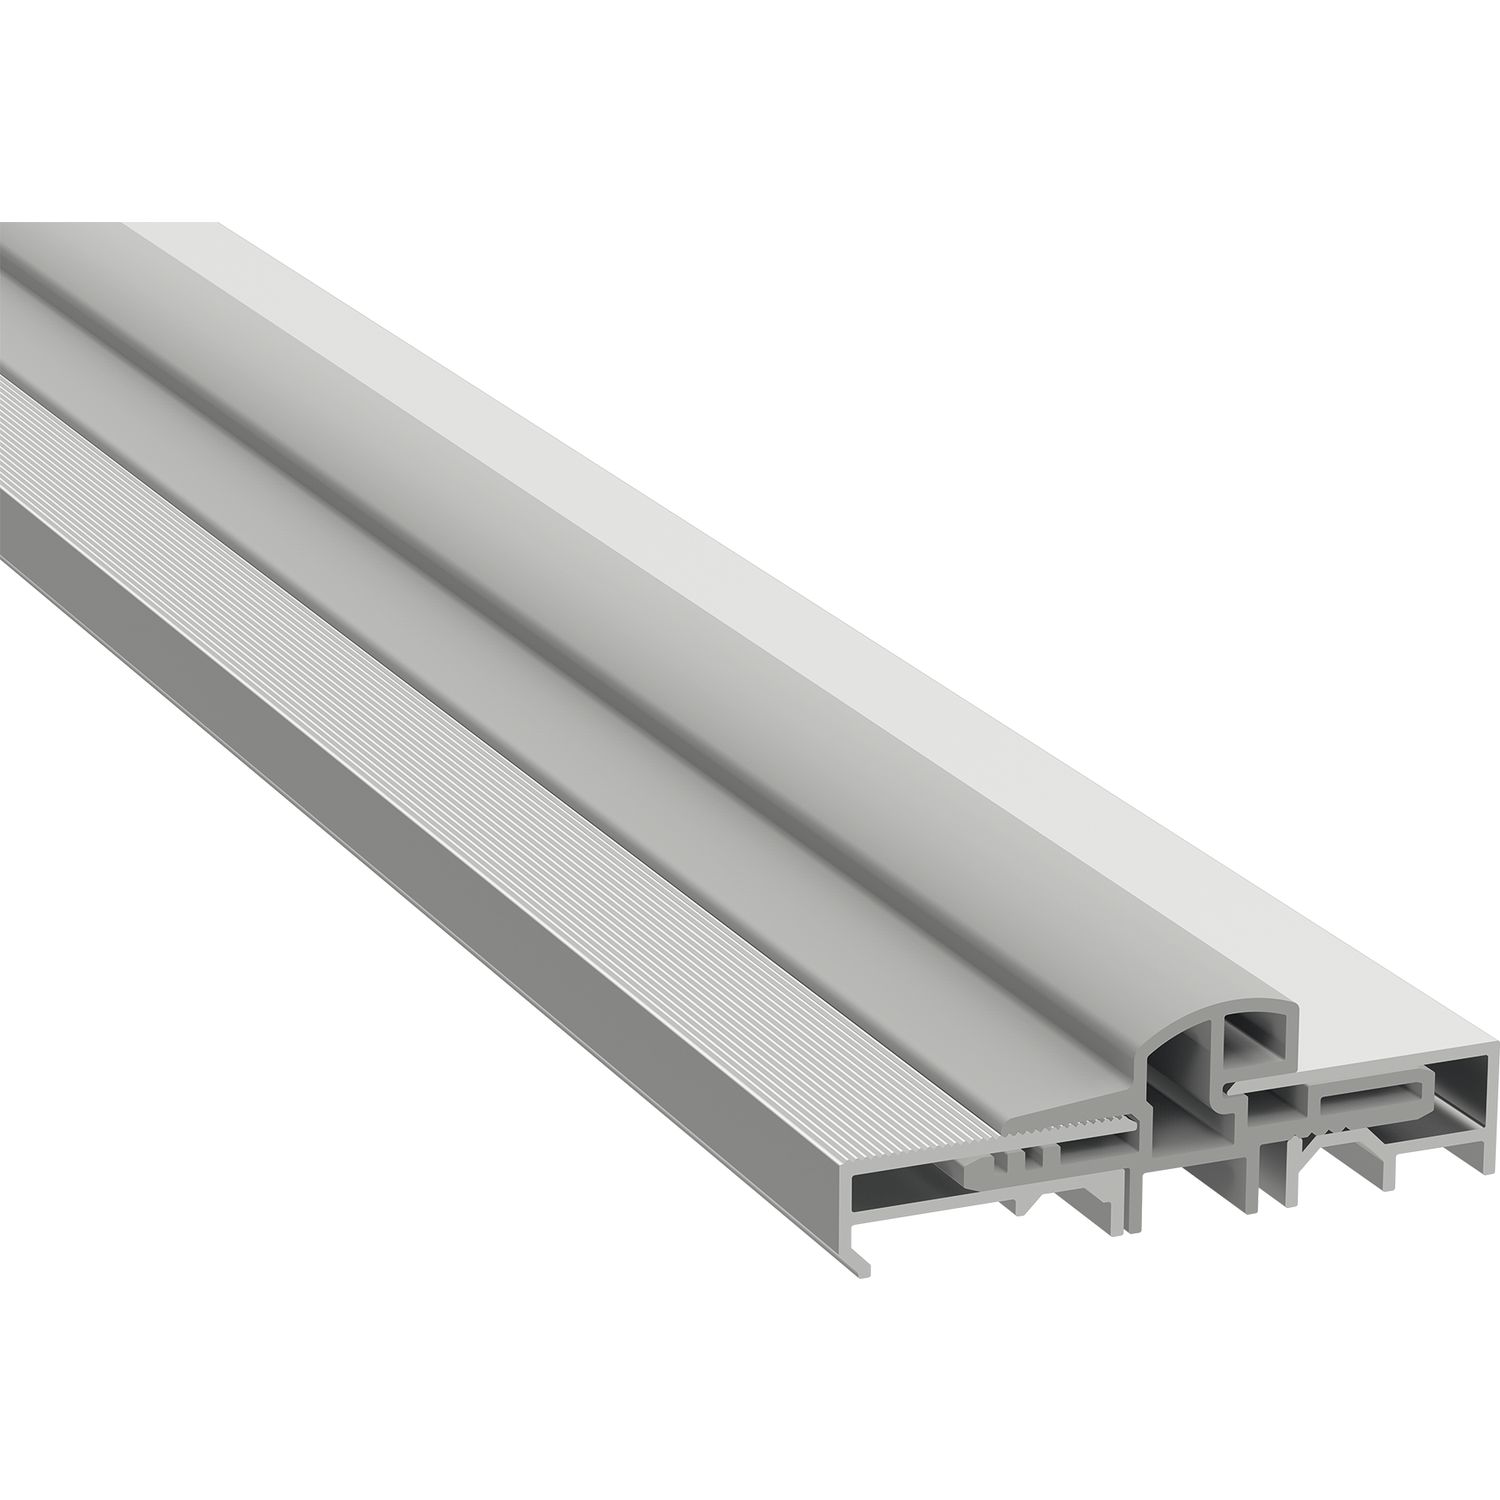 Türschwelle TRANSIT 76 - 94, 5000 mm, Höhe 24 mm, Aluminium silber